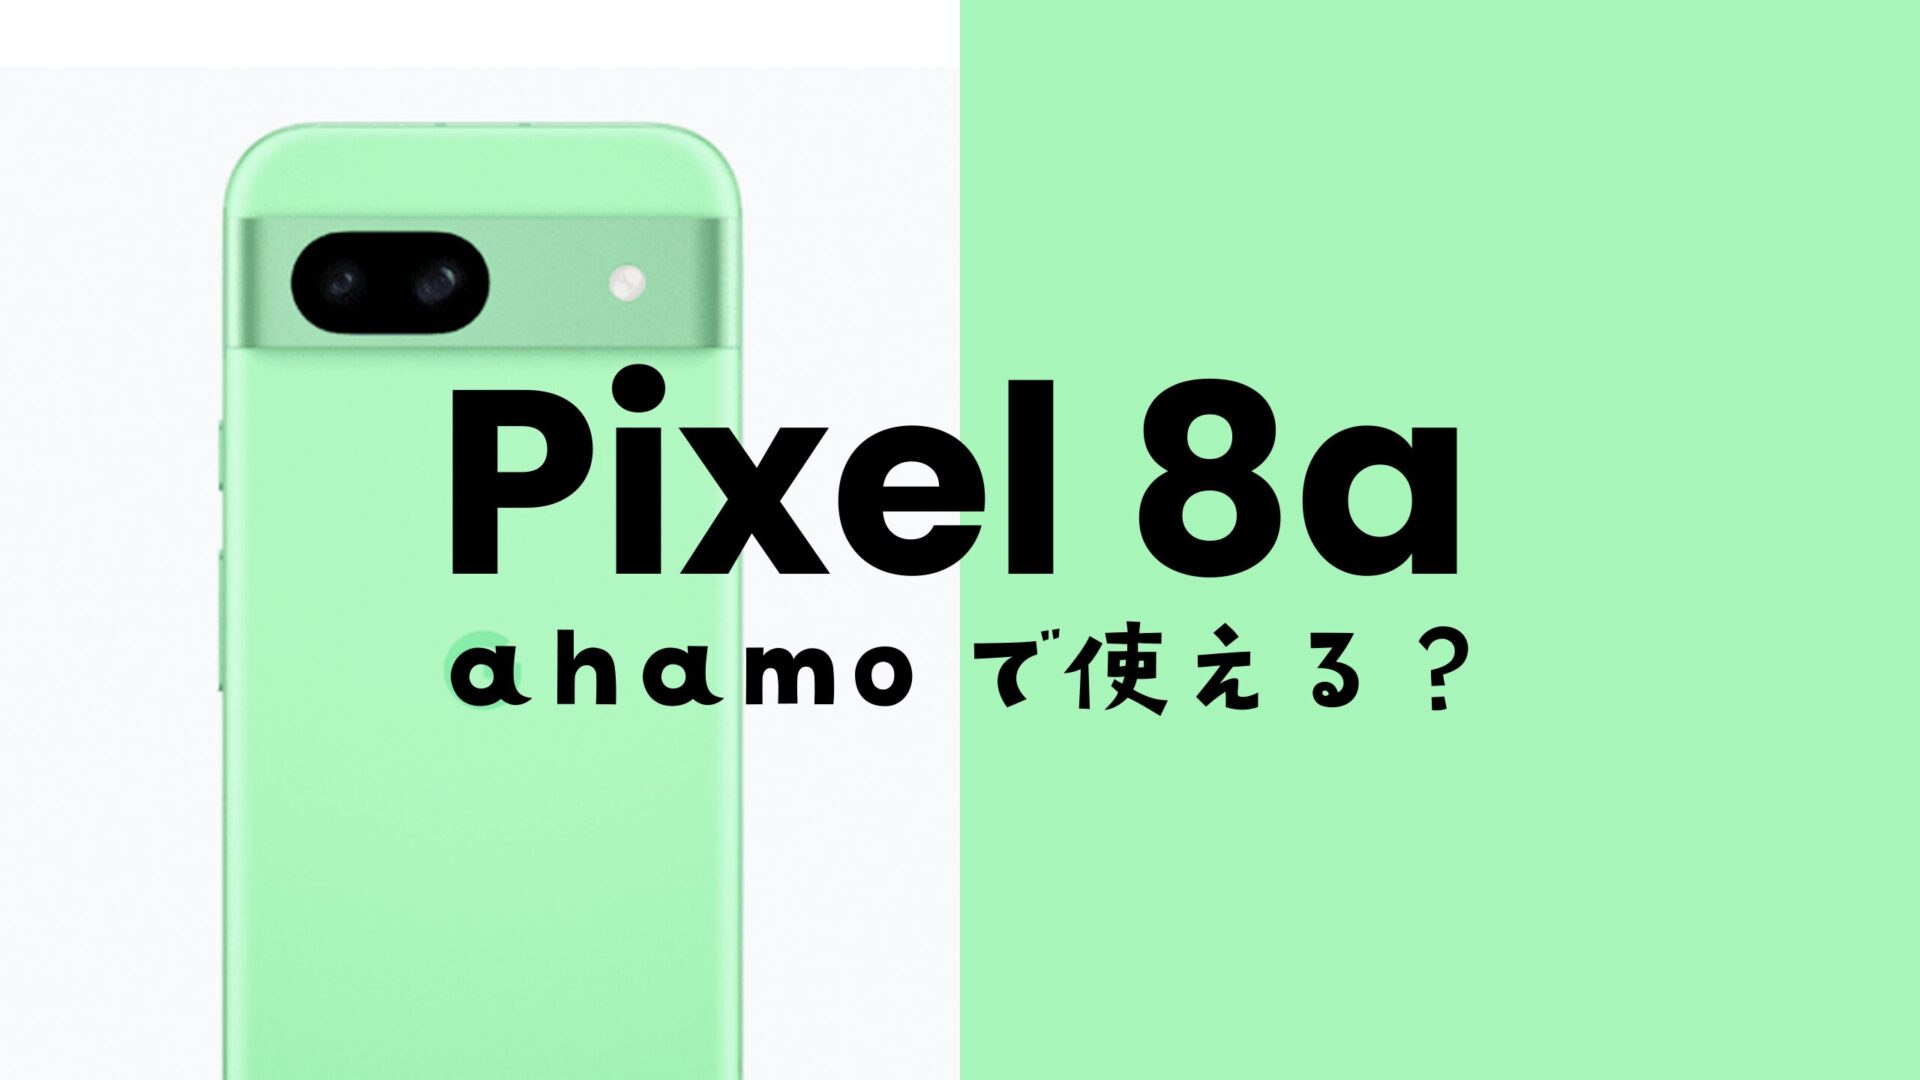 ahamo(アハモ)でGoogle Pixel 8aが使える&対応機種。セット販売も用意。のサムネイル画像